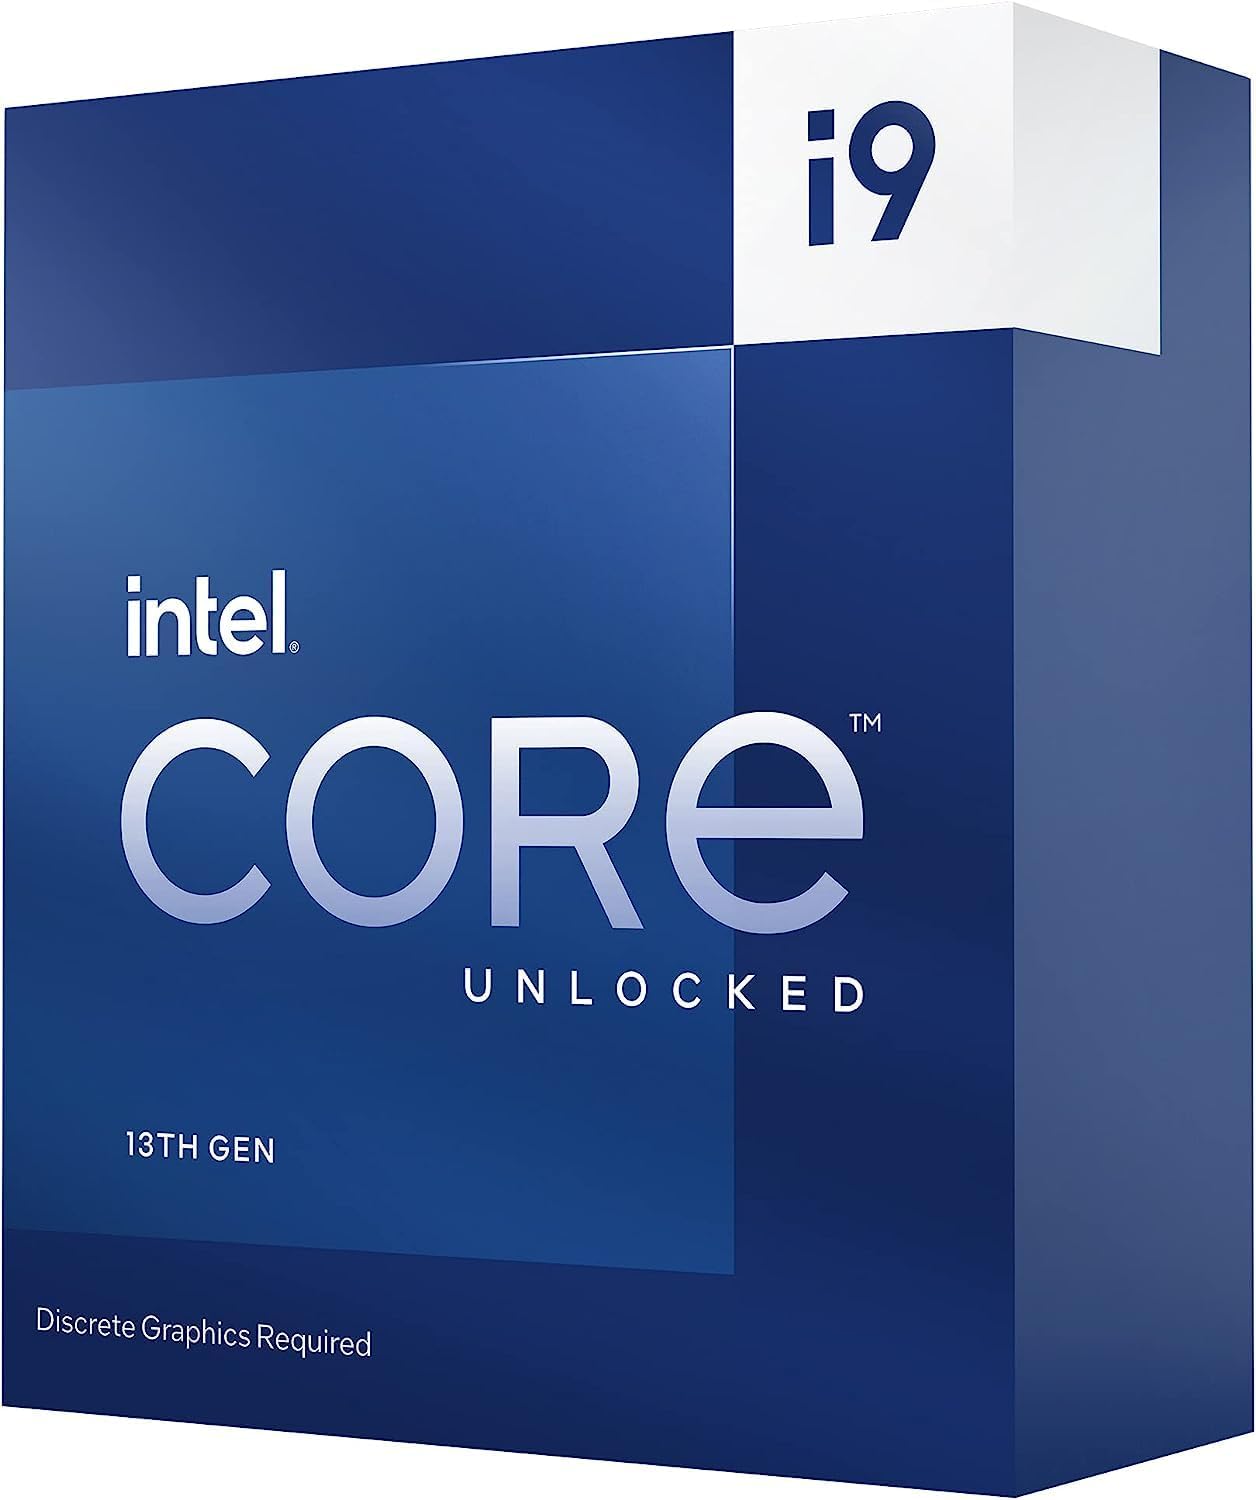 $476.99: Intel Core i9-13900KF Gaming Desktop Processor 24 cores (8 P-cores + 16 E-cores) - Unlocked @ Amazon